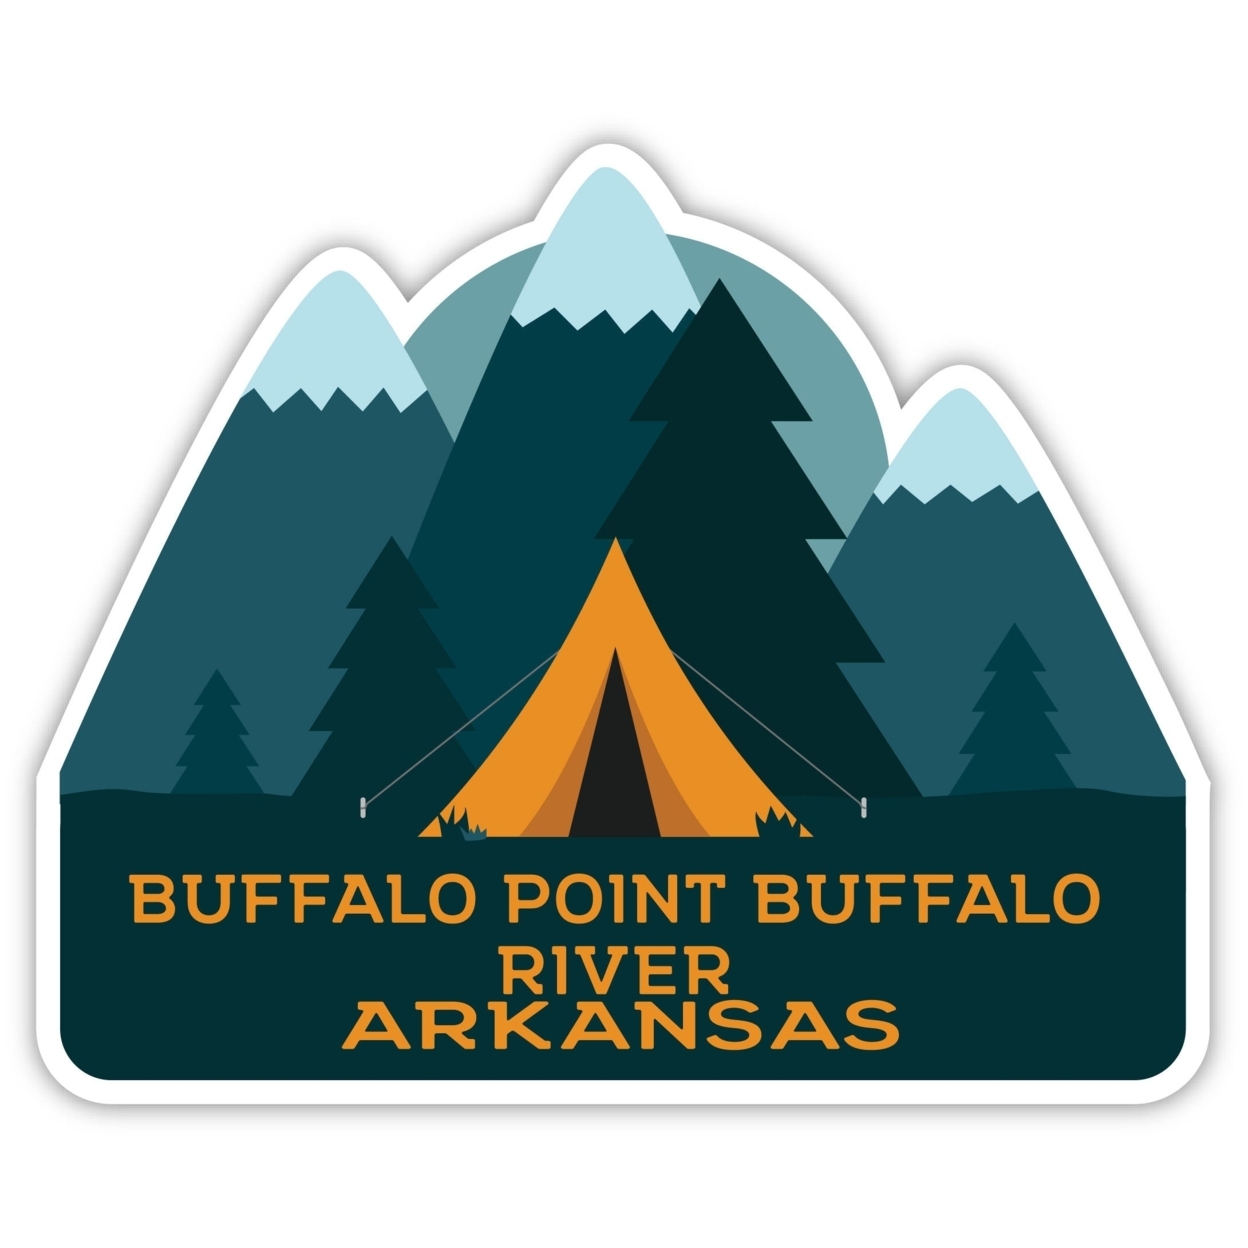 Buffalo Point Buffalo River Arkansas Souvenir Decorative Stickers (Choose Theme And Size) - 4-Pack, 12-Inch, Camp Life